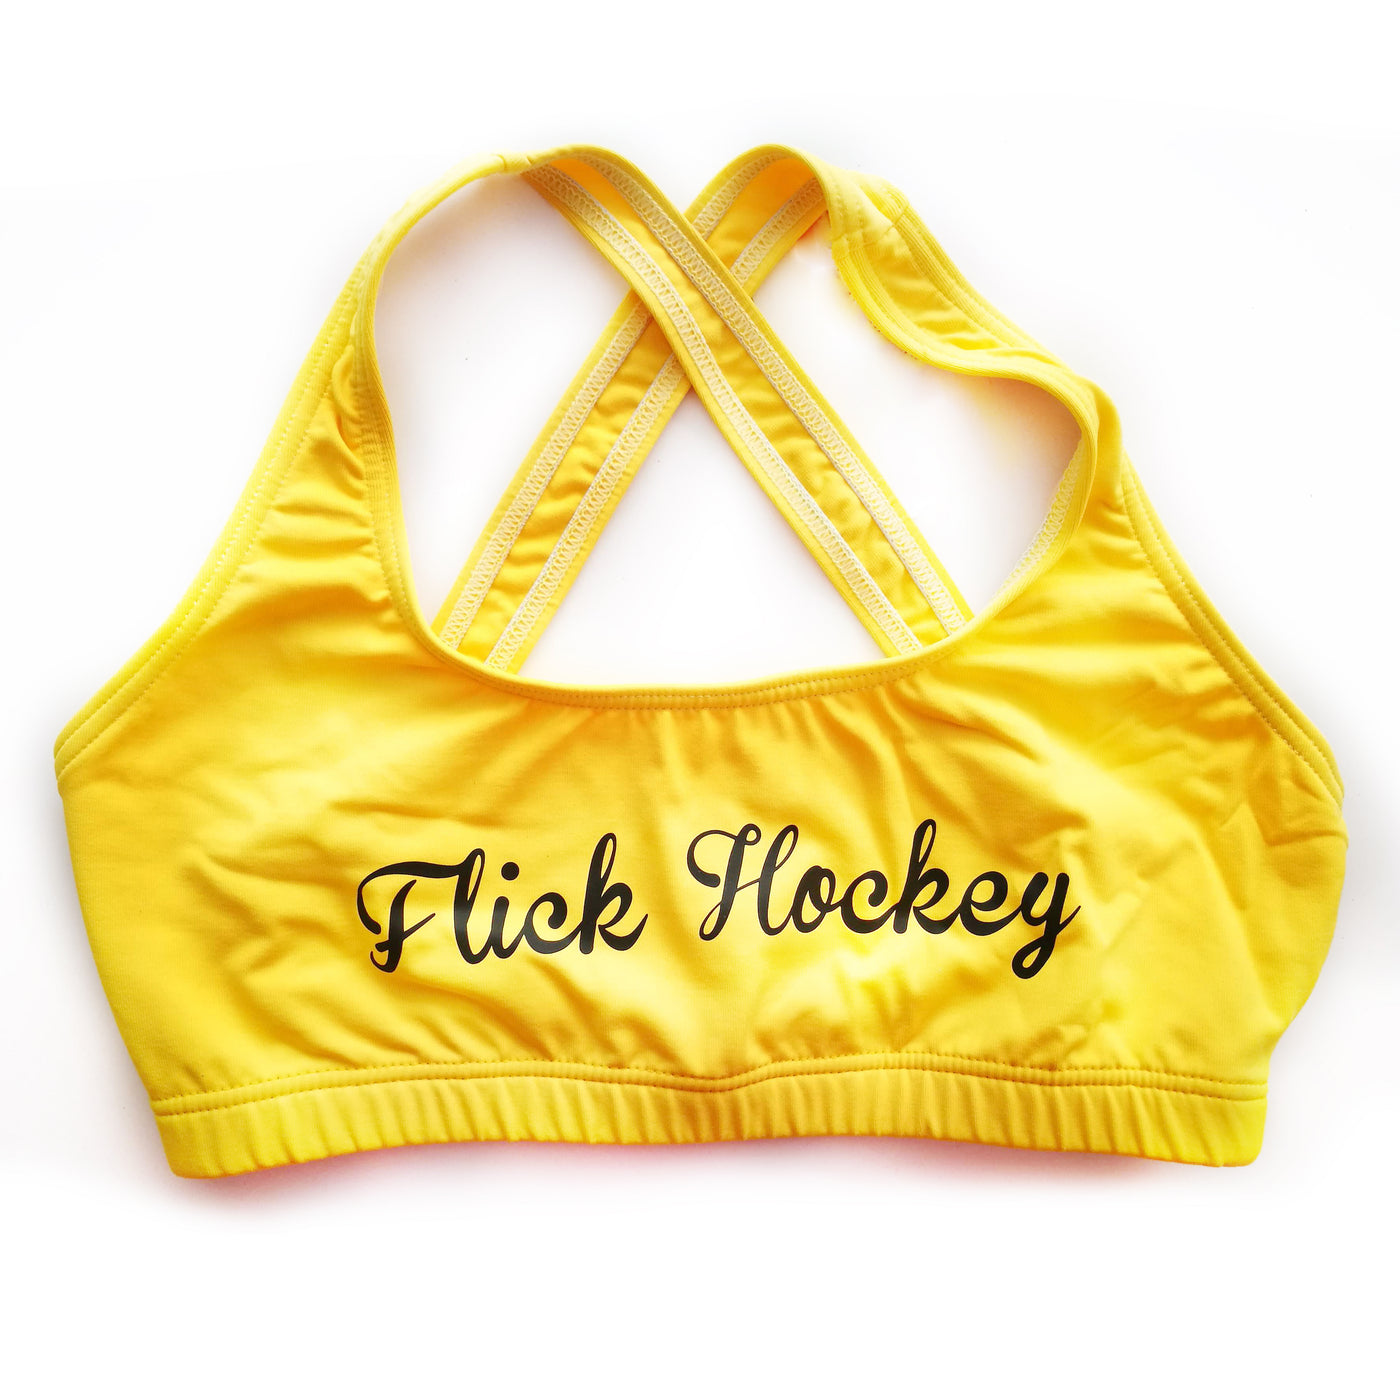 Top deportivo Flick Hockey Amarillo negro